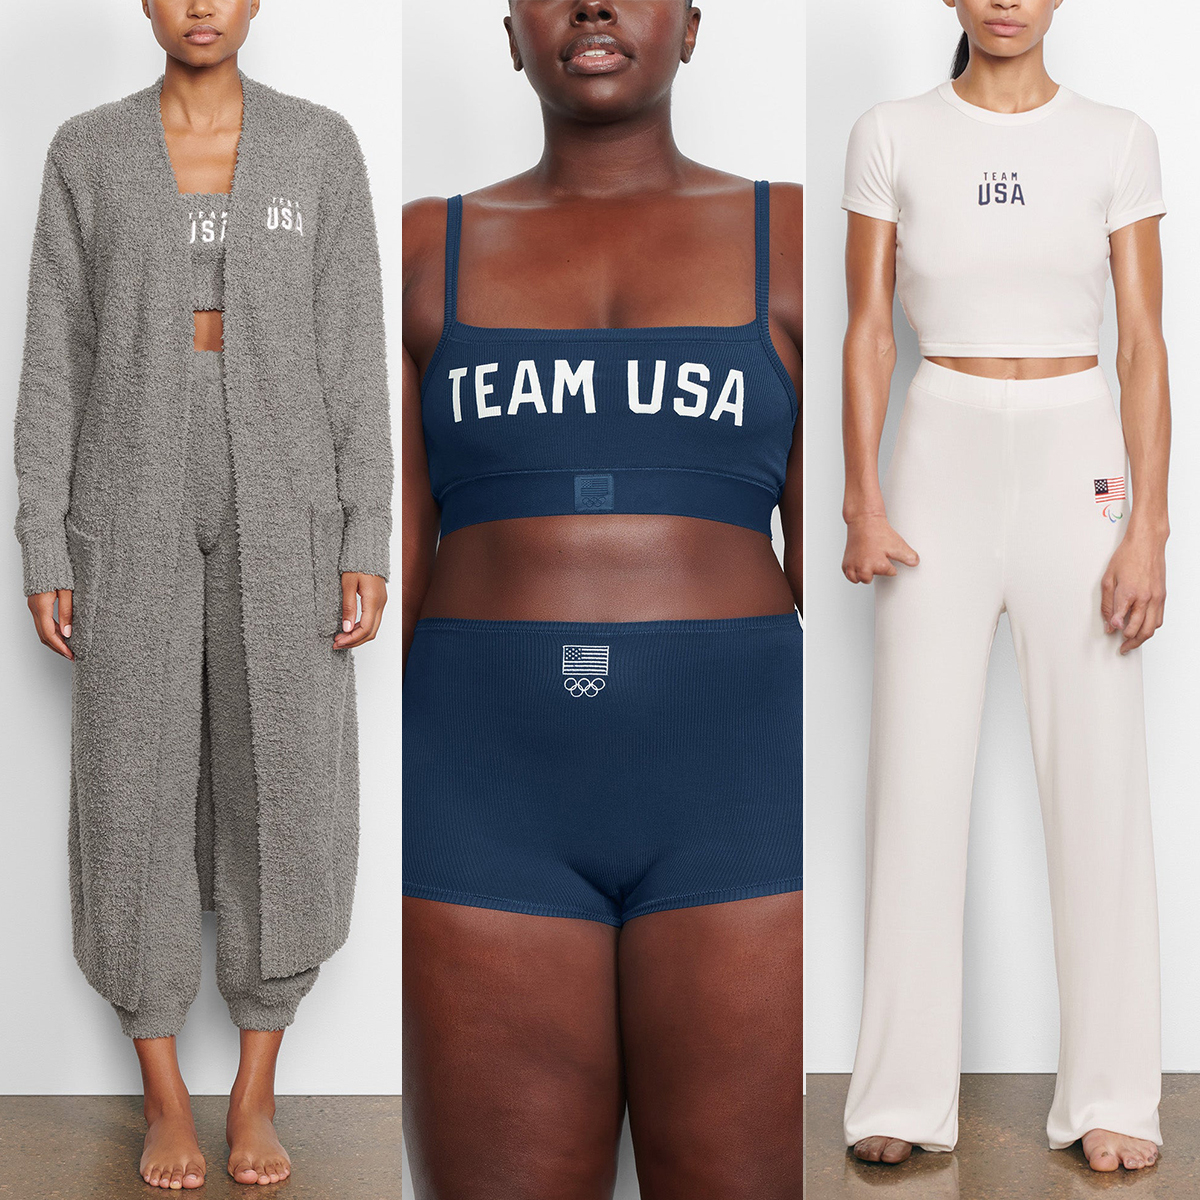 Kim Kardashian reveals her SKIMS brand has designed Team USA's official  UNDERGARMENTS